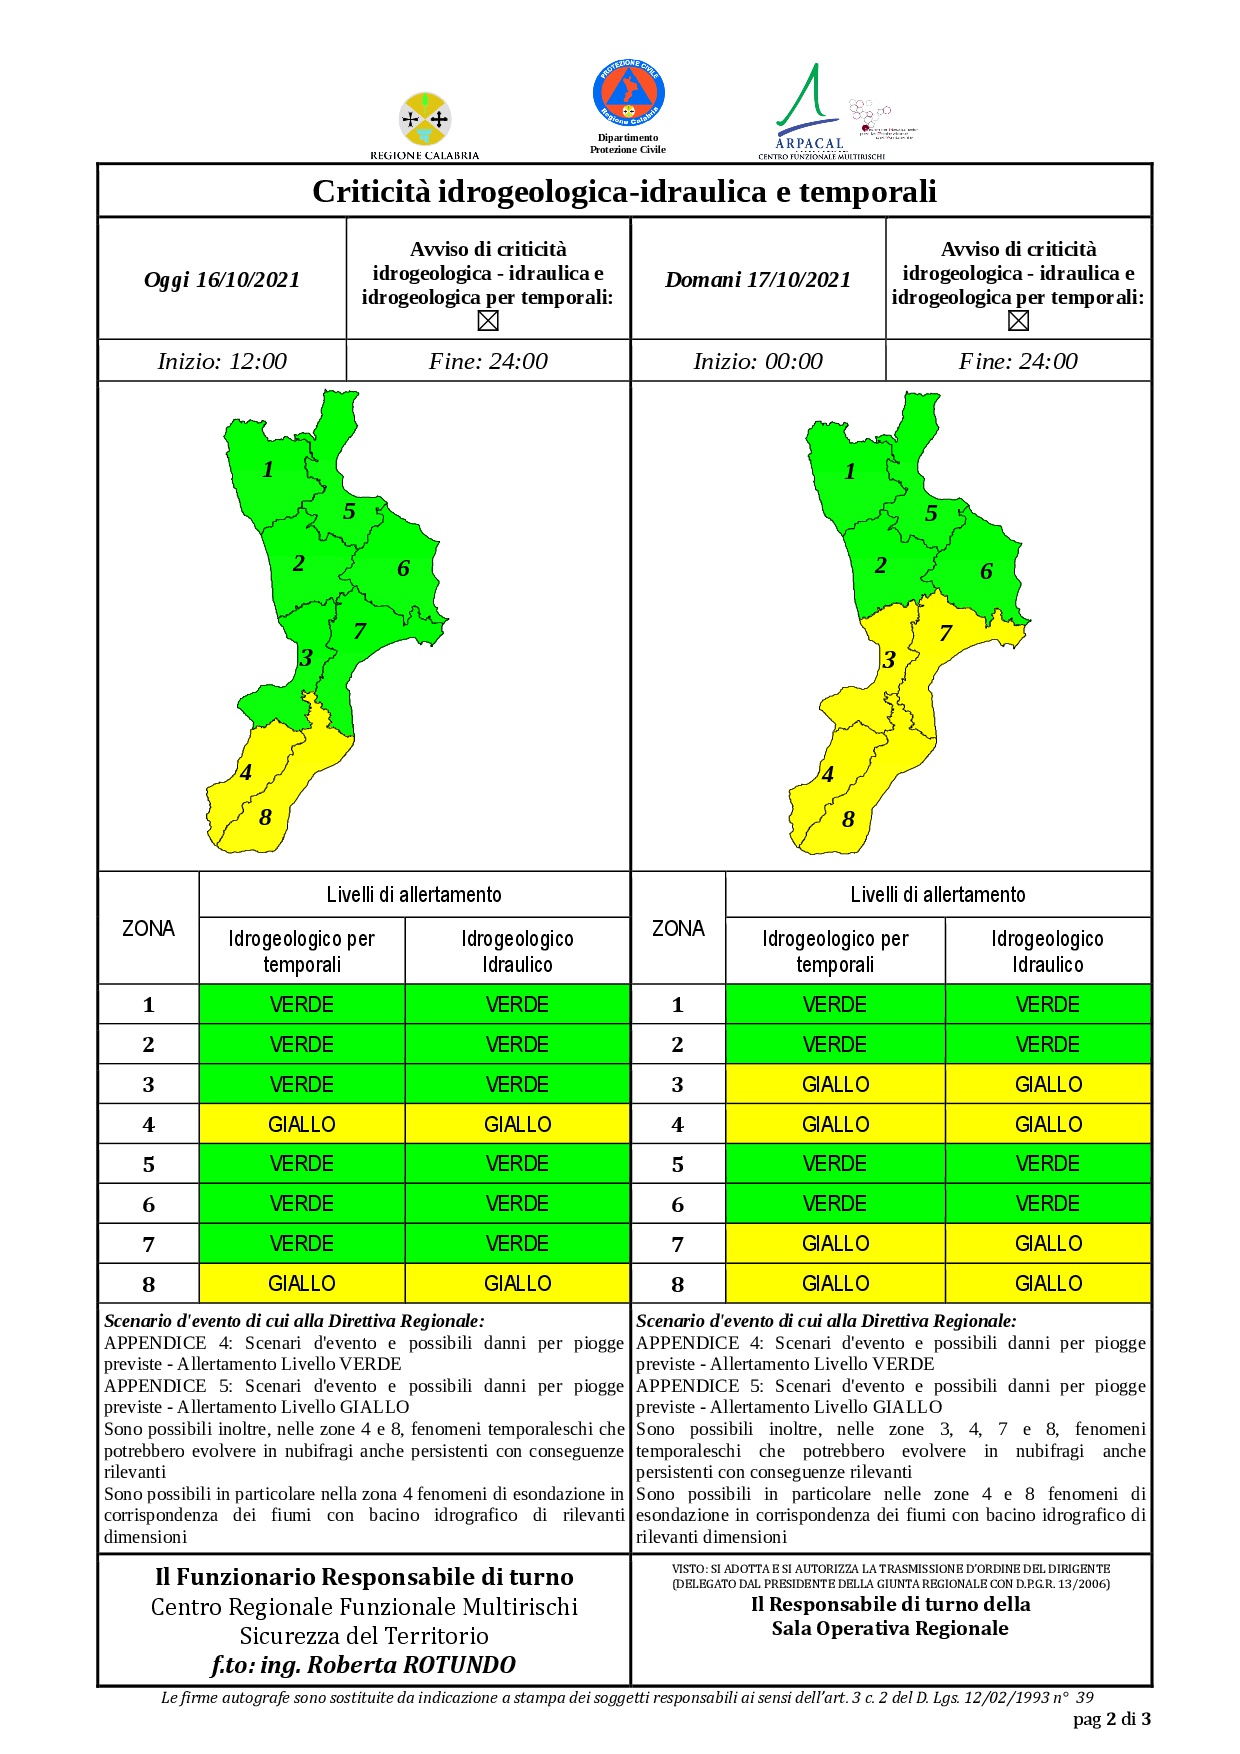 Criticità idrogeologica-idraulica e temporali in Calabria 16-10-2021